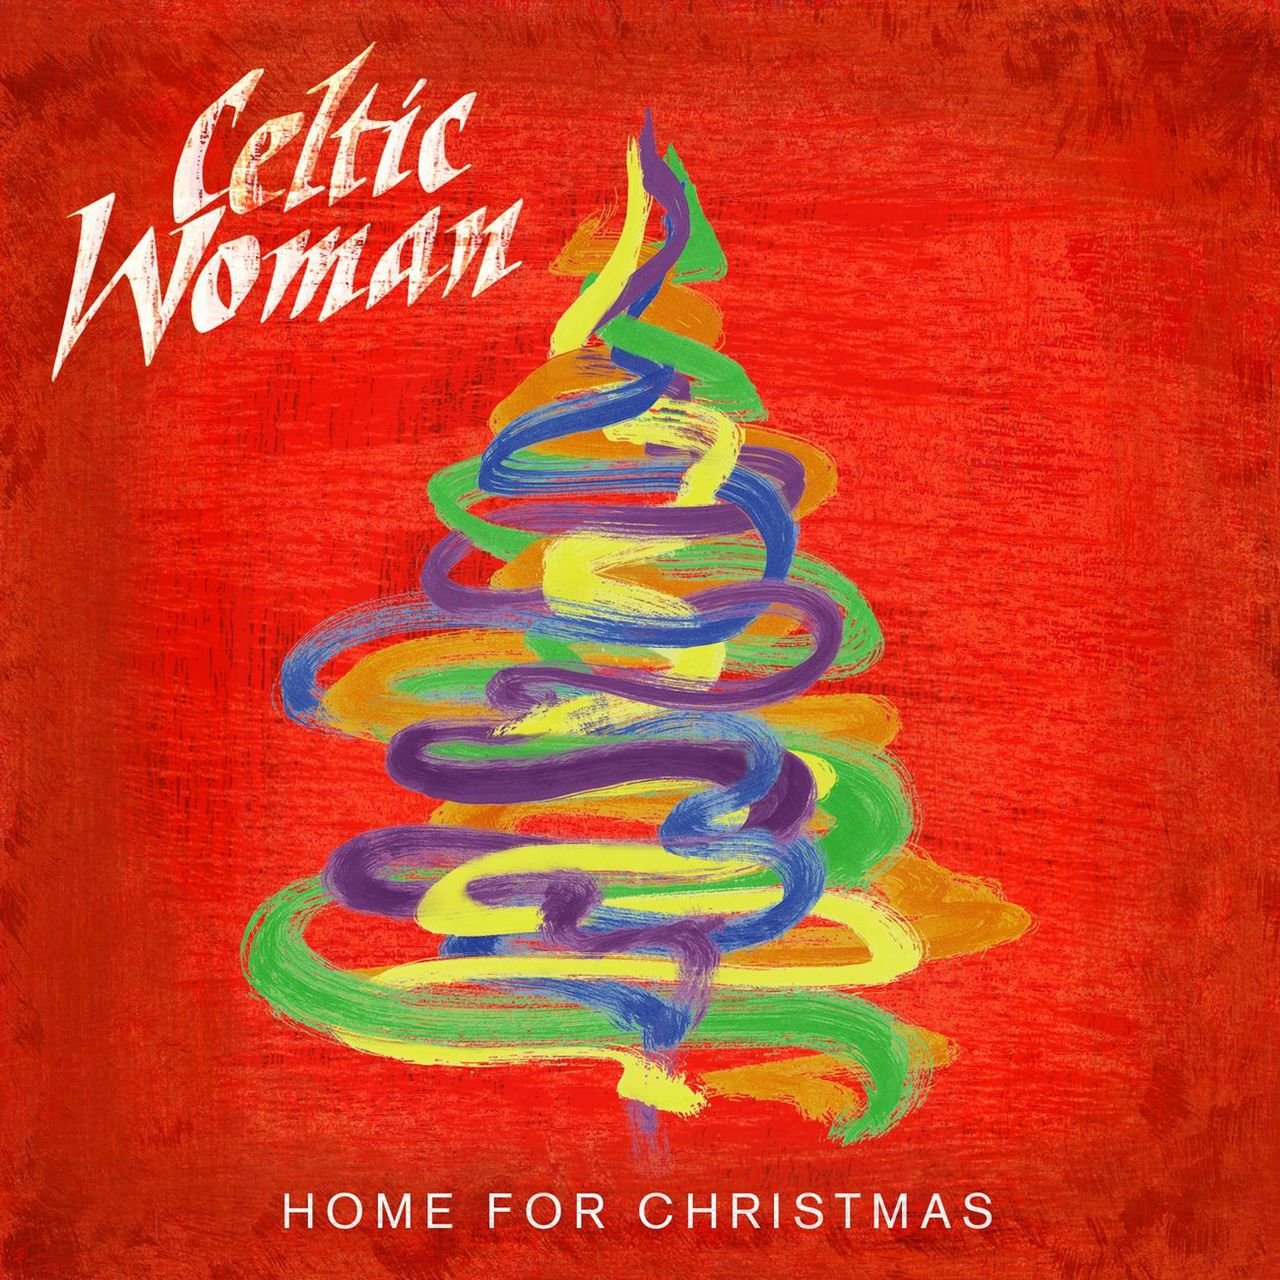 Celtic Woman Home For Christmas cover artwork